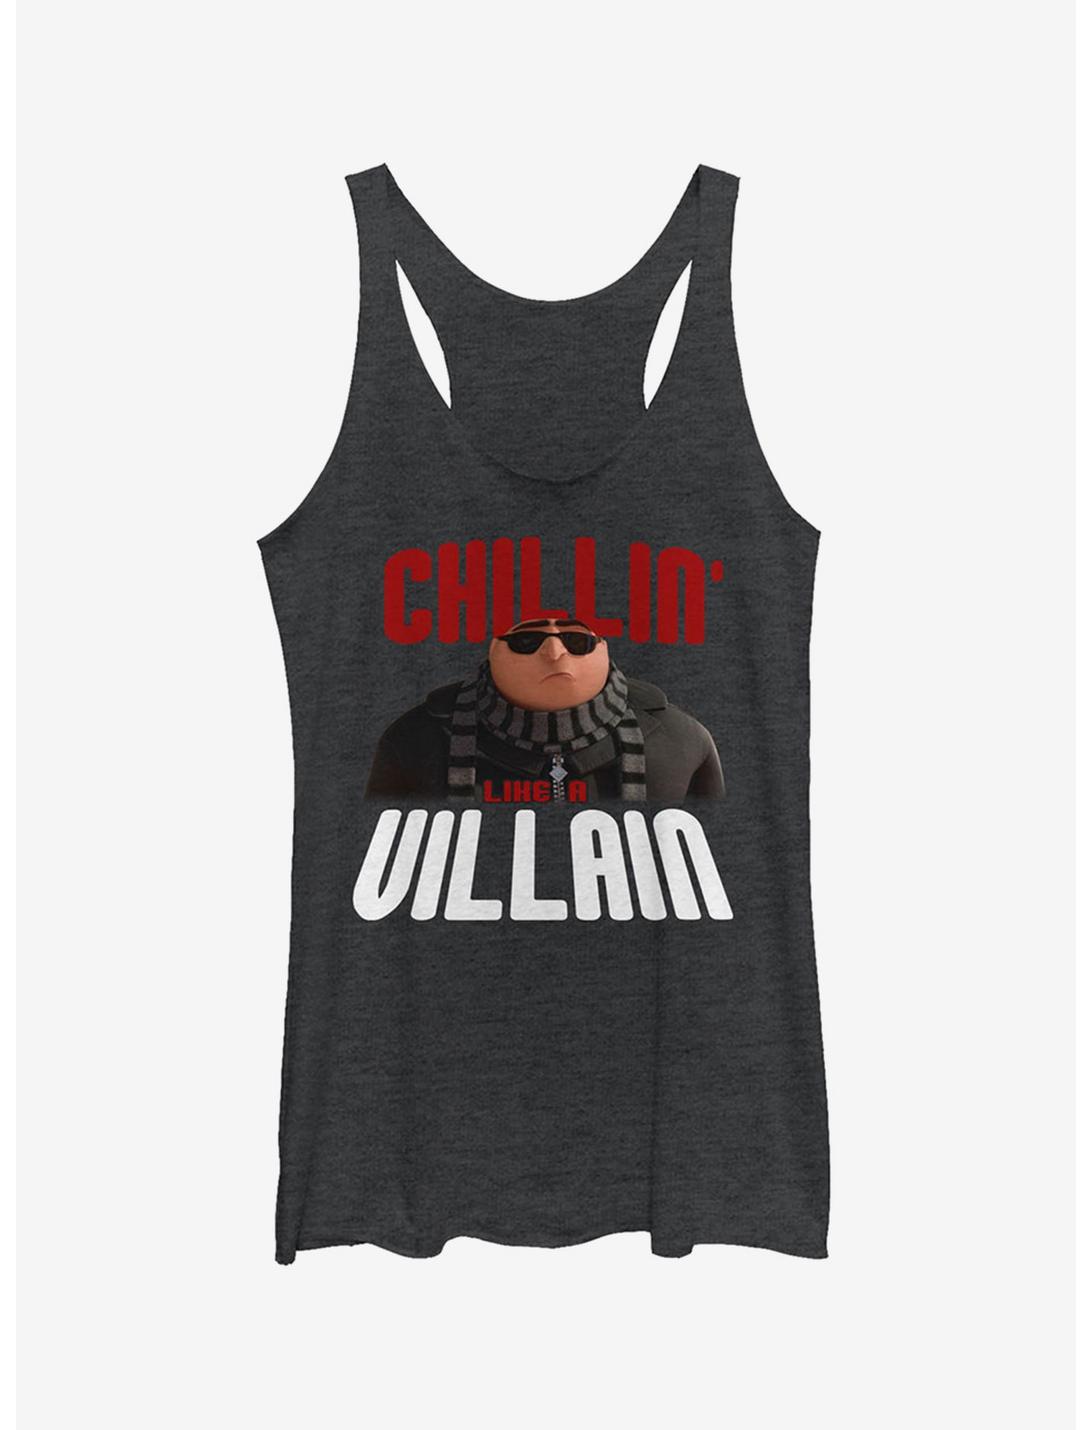 Minion Gru Chillin' Like a Villain Girls Tank Top, BLK HTR, hi-res